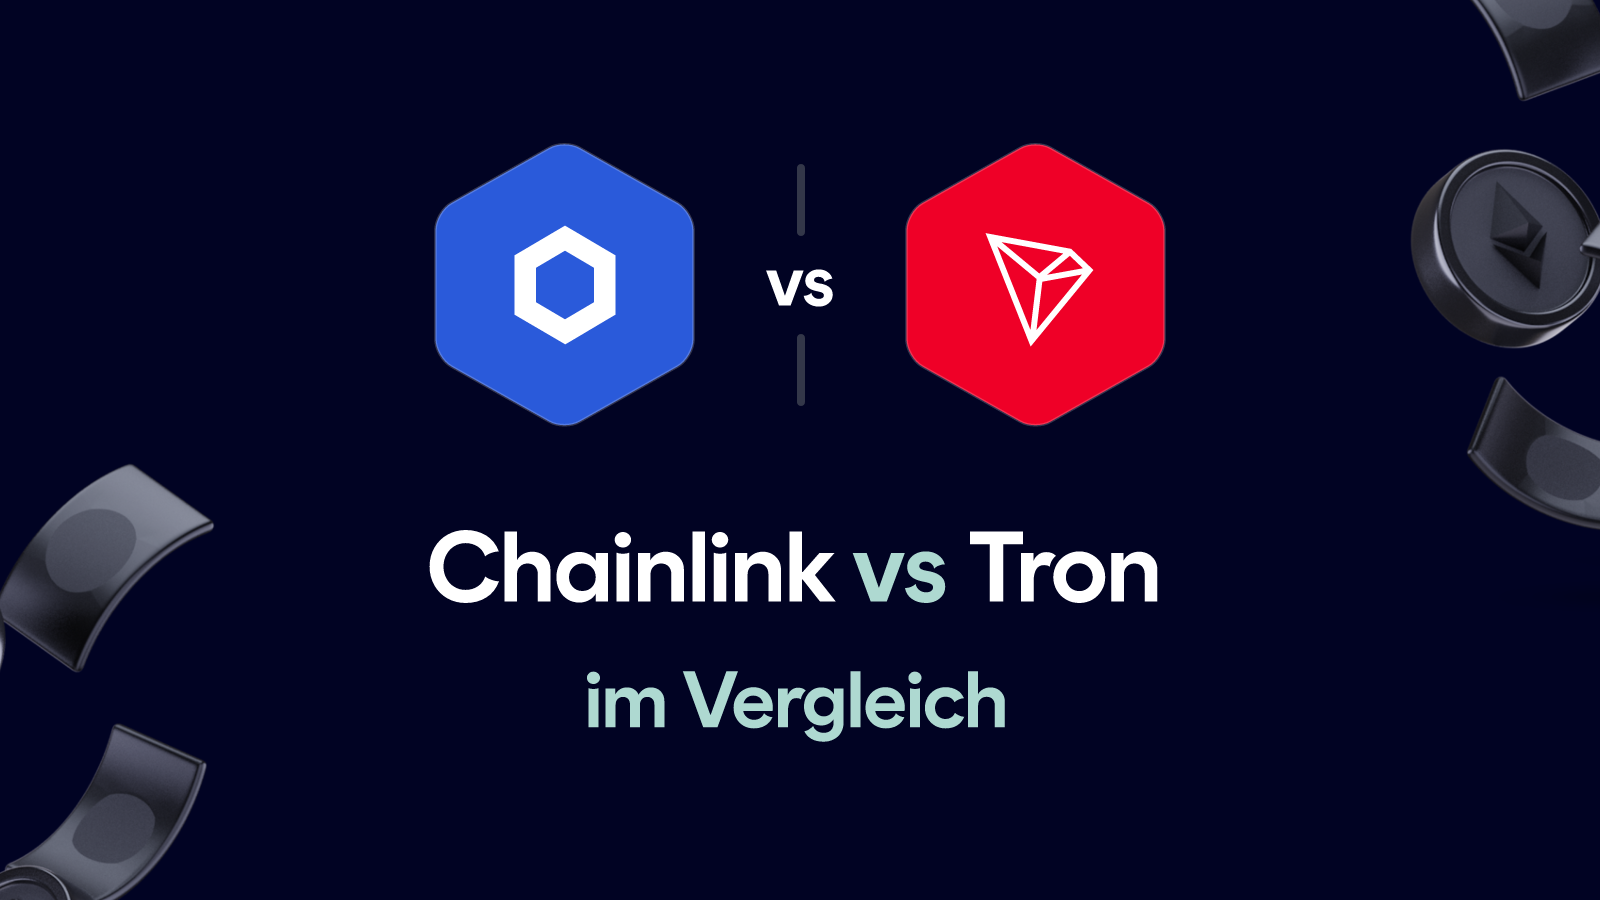 Chainlink vs Tron